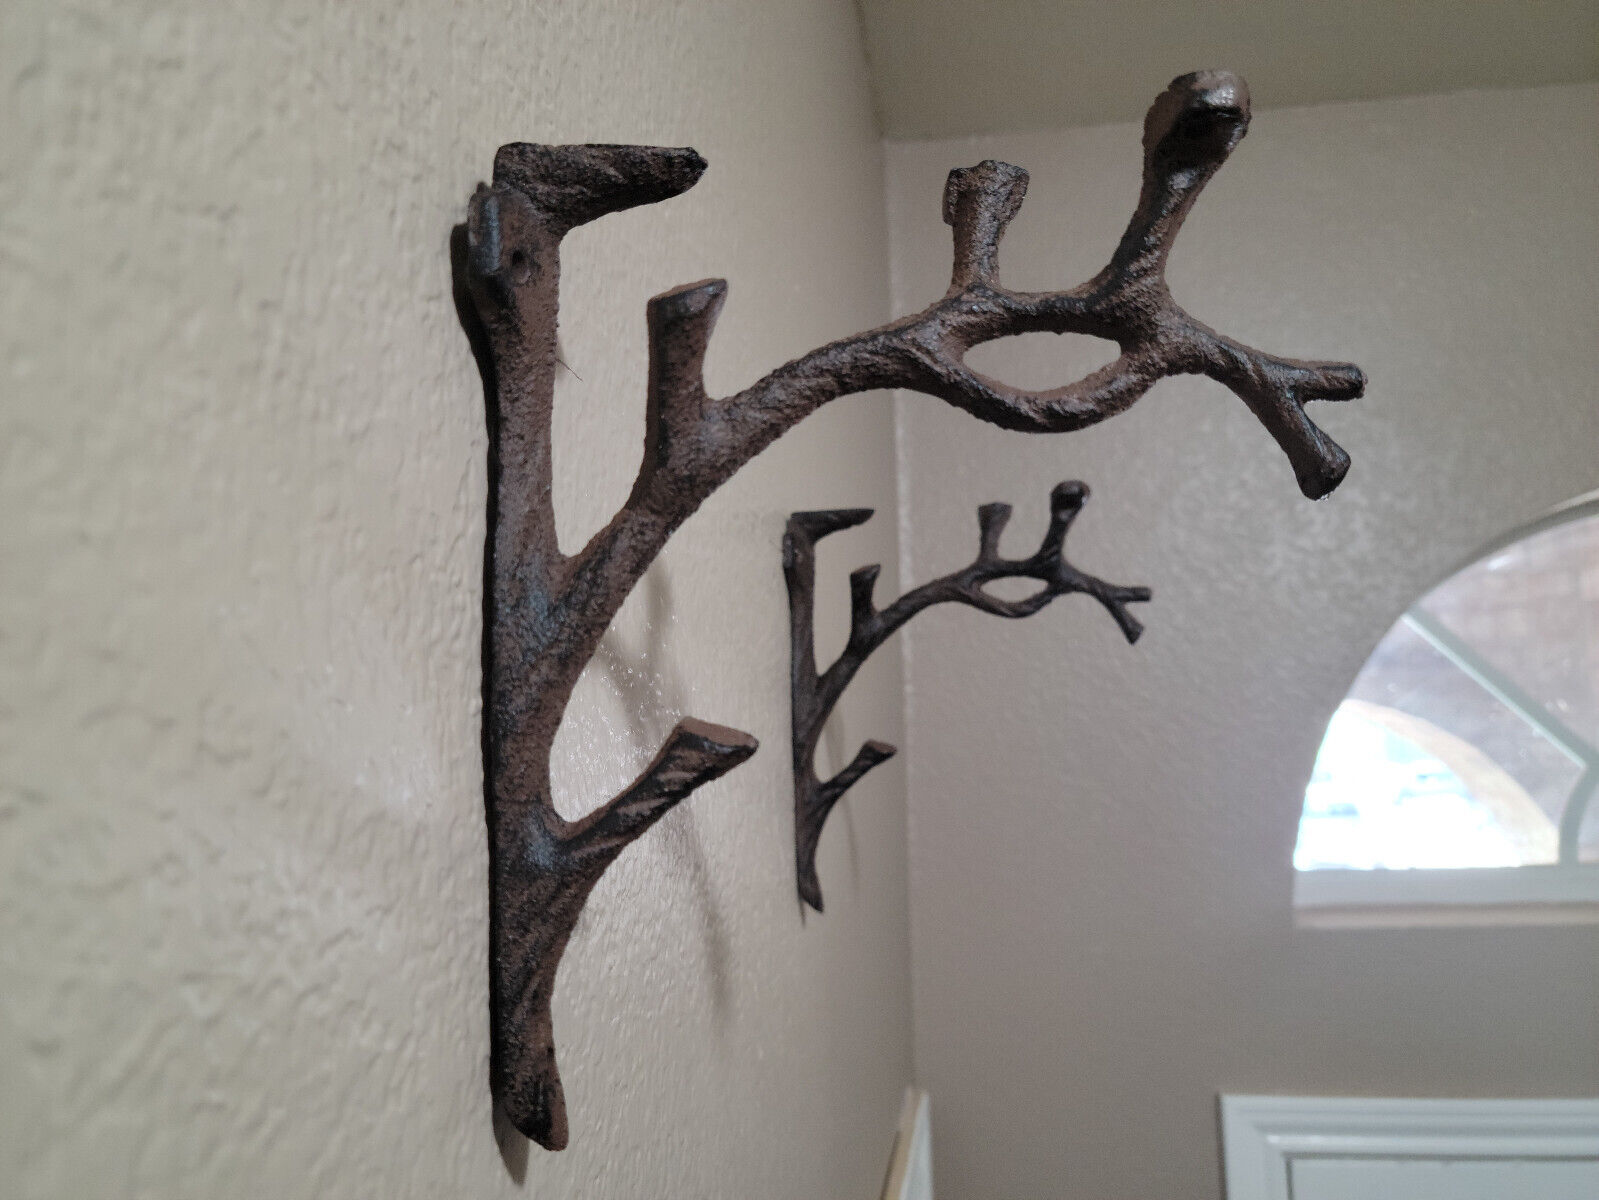 2 Rustic Cast Iron Shelf Bracket Wall Mount Hardware Brace Tree Branch Sculpture Без бренда - фотография #4